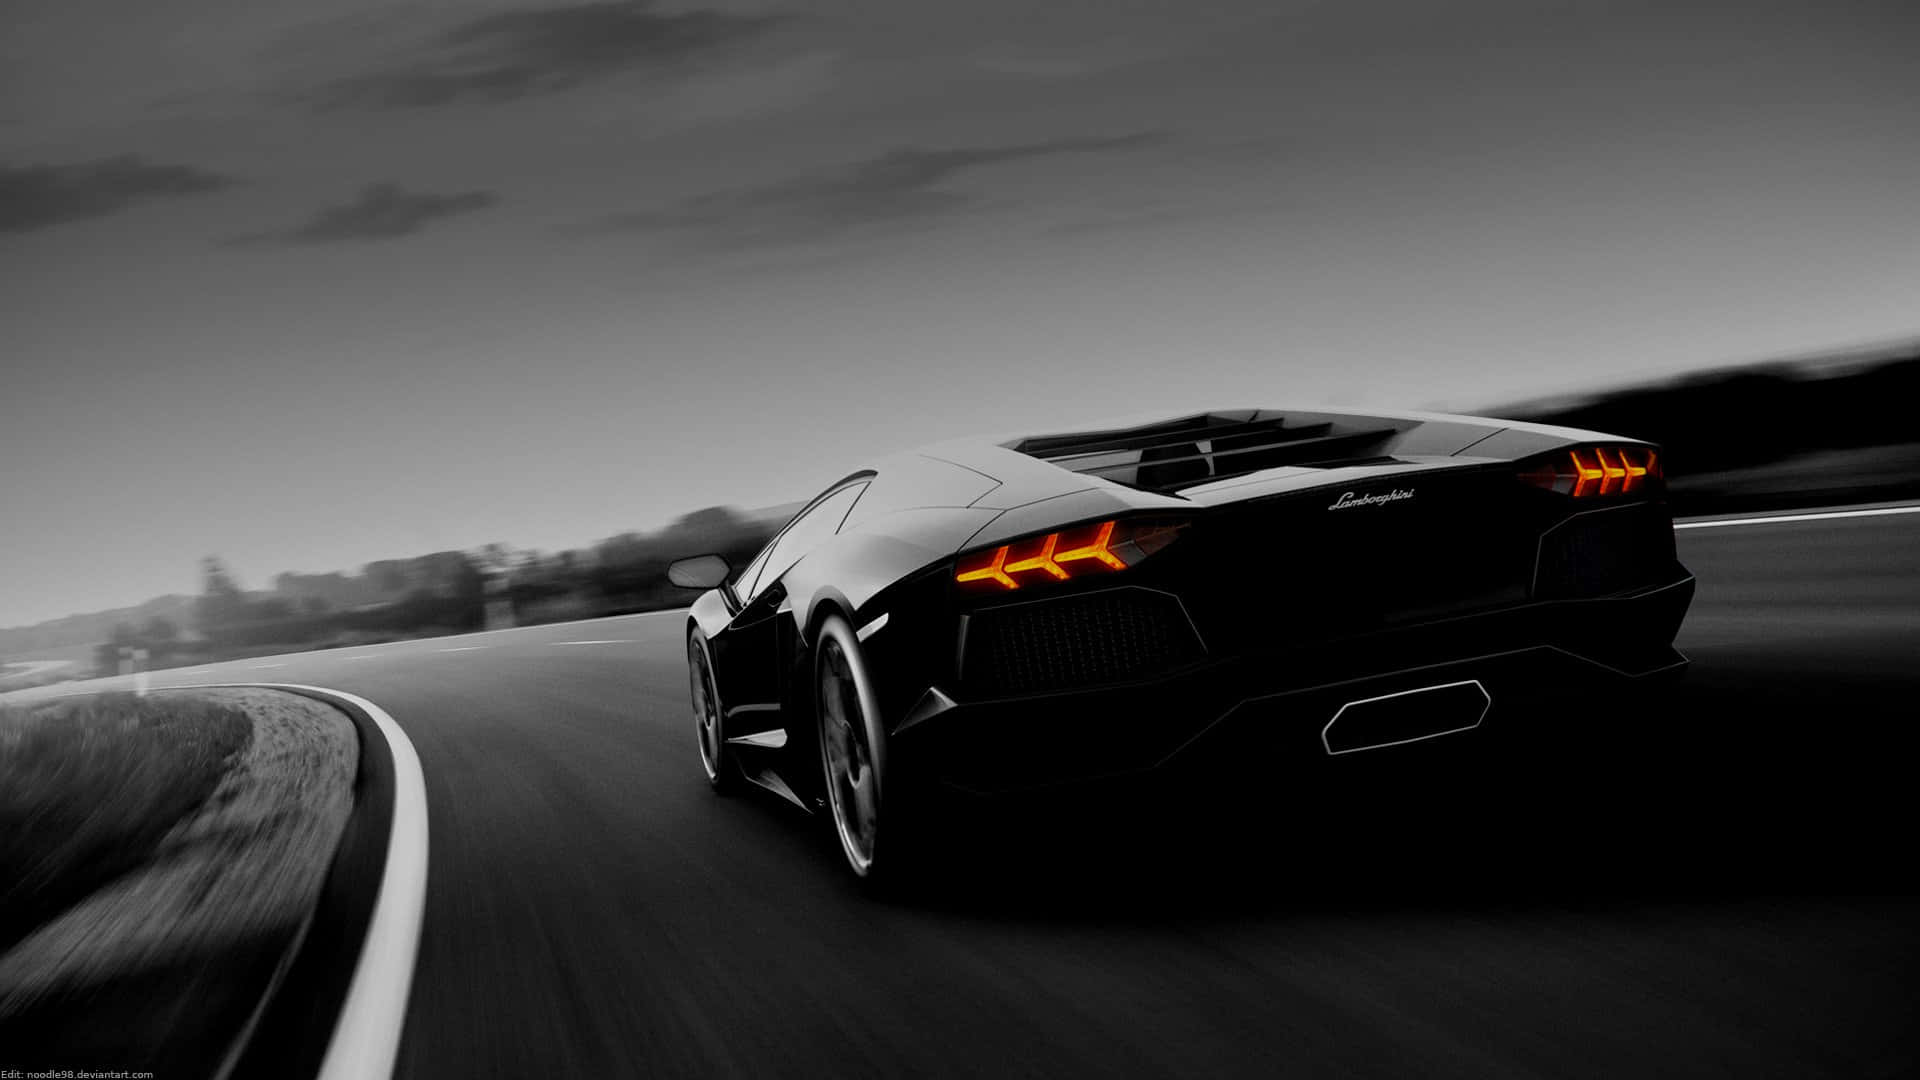 Fondode Pantalla En Vivo Del Carro Lamborghini Aventador En Color Negro. Fondo de pantalla